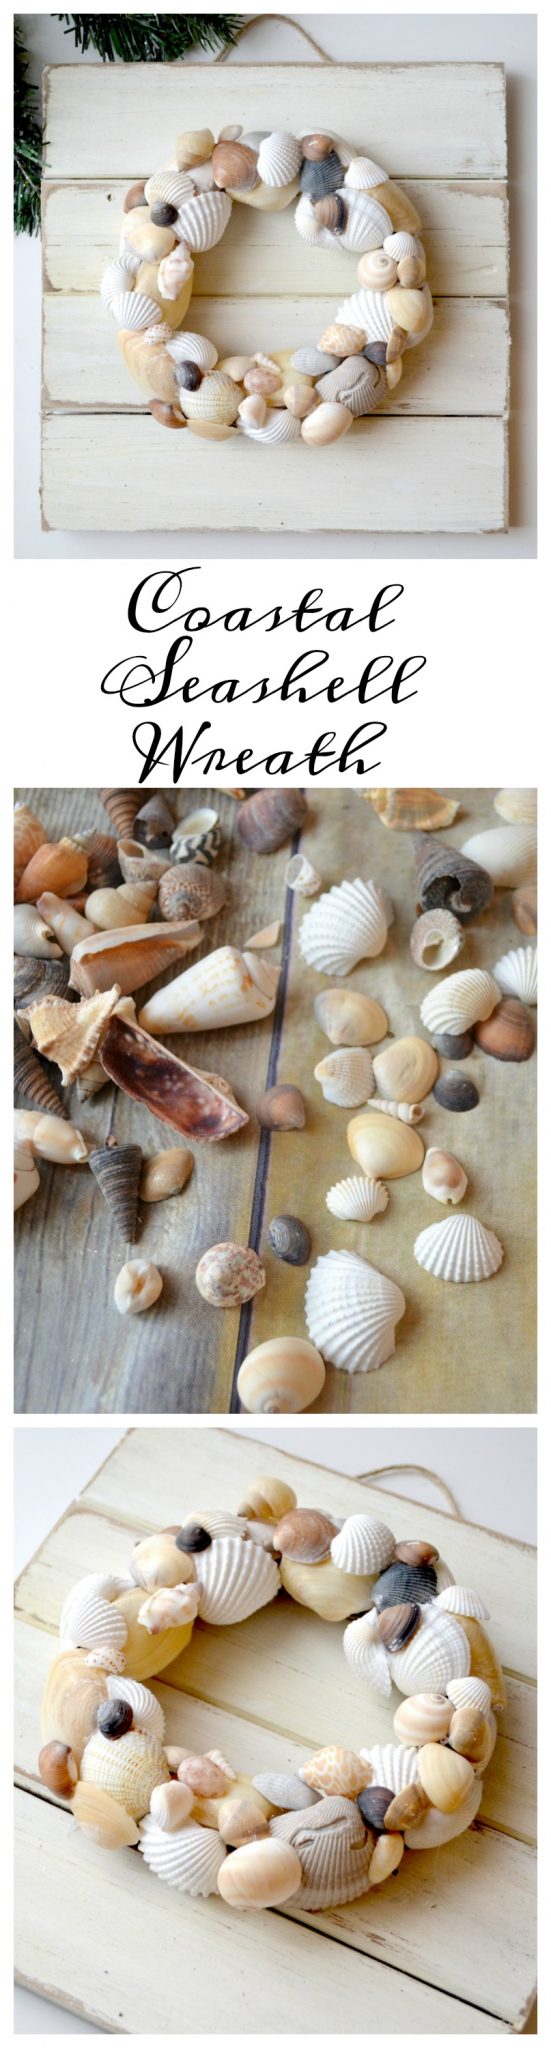 Coastal Seashell Wreath